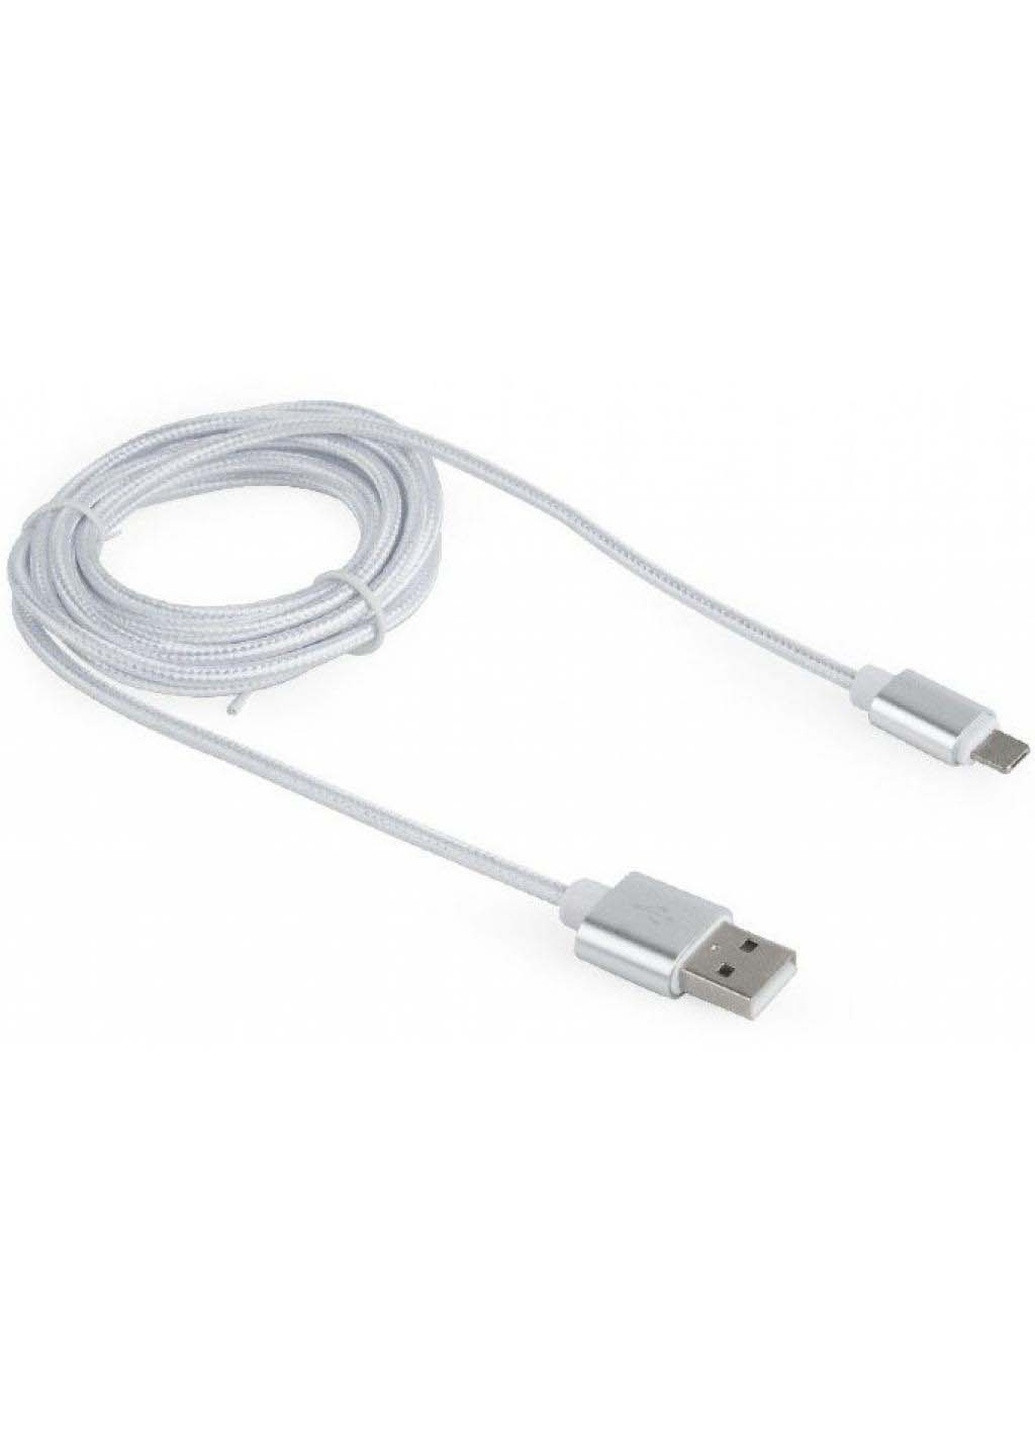 Дата кабель USB 2.0 AM to Micro 5P 1.8m (CCB-USB2AM-mU8P-6) Cablexpert usb 2.0 am to lightning + micro 5p 1.8m (239380742)